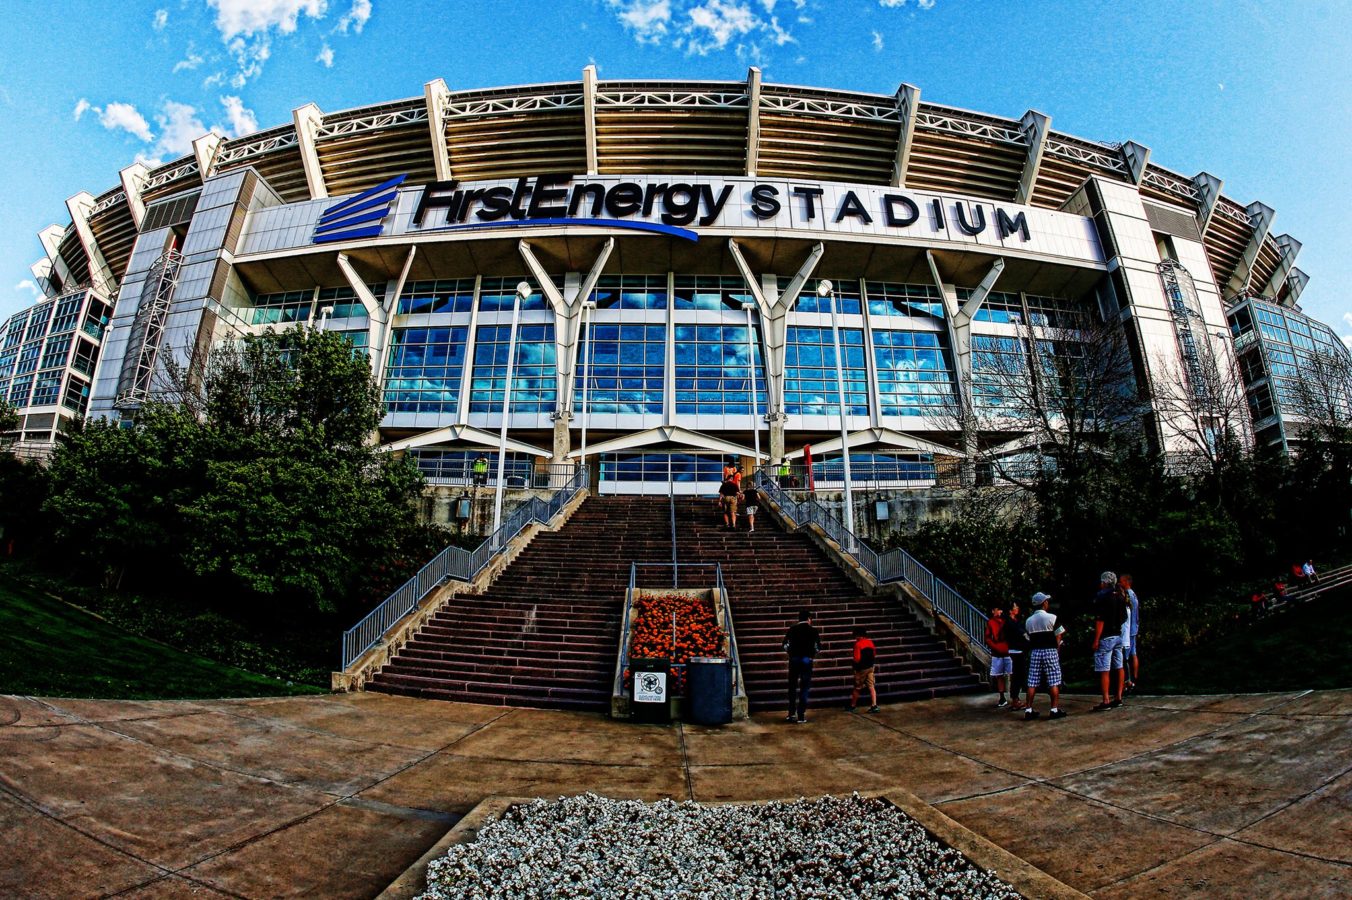 Next Wave in NFL Stadium Renovations? - Football Stadium Digest